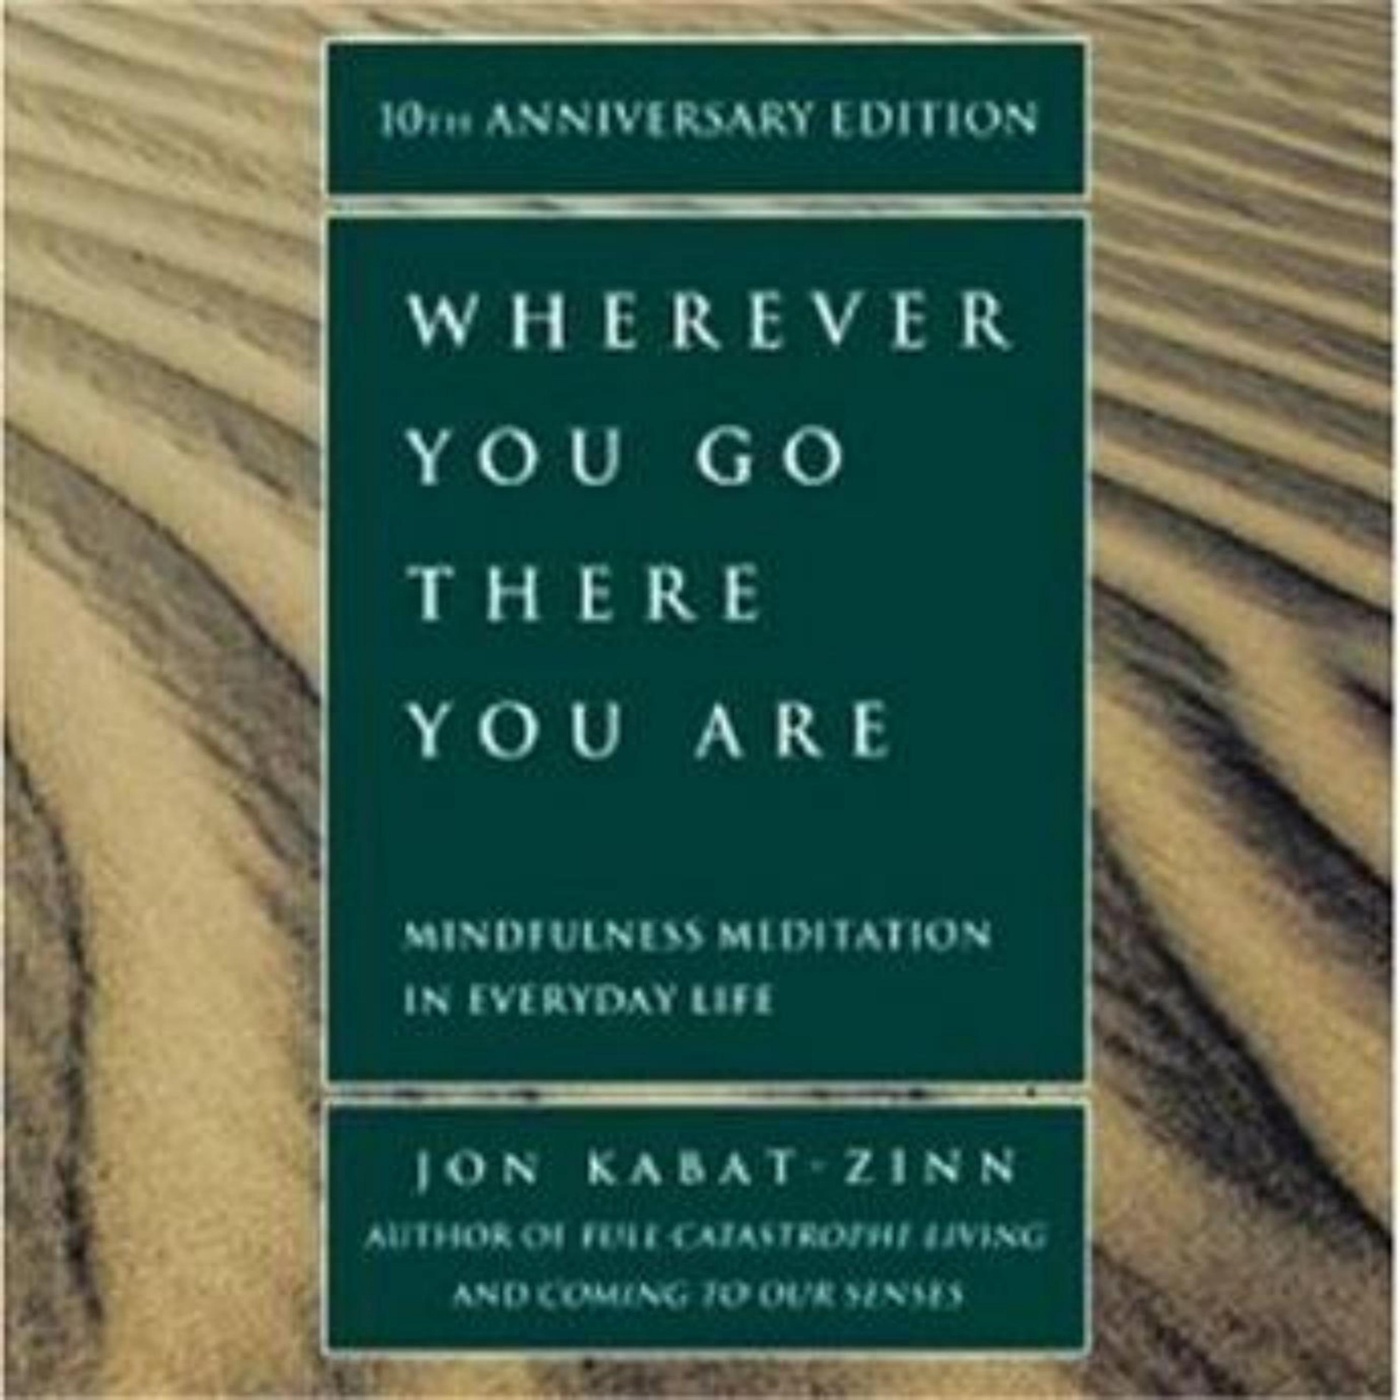 Finding Yourself: A Journey Through Mindfulness with Jon Kabat-Zinn